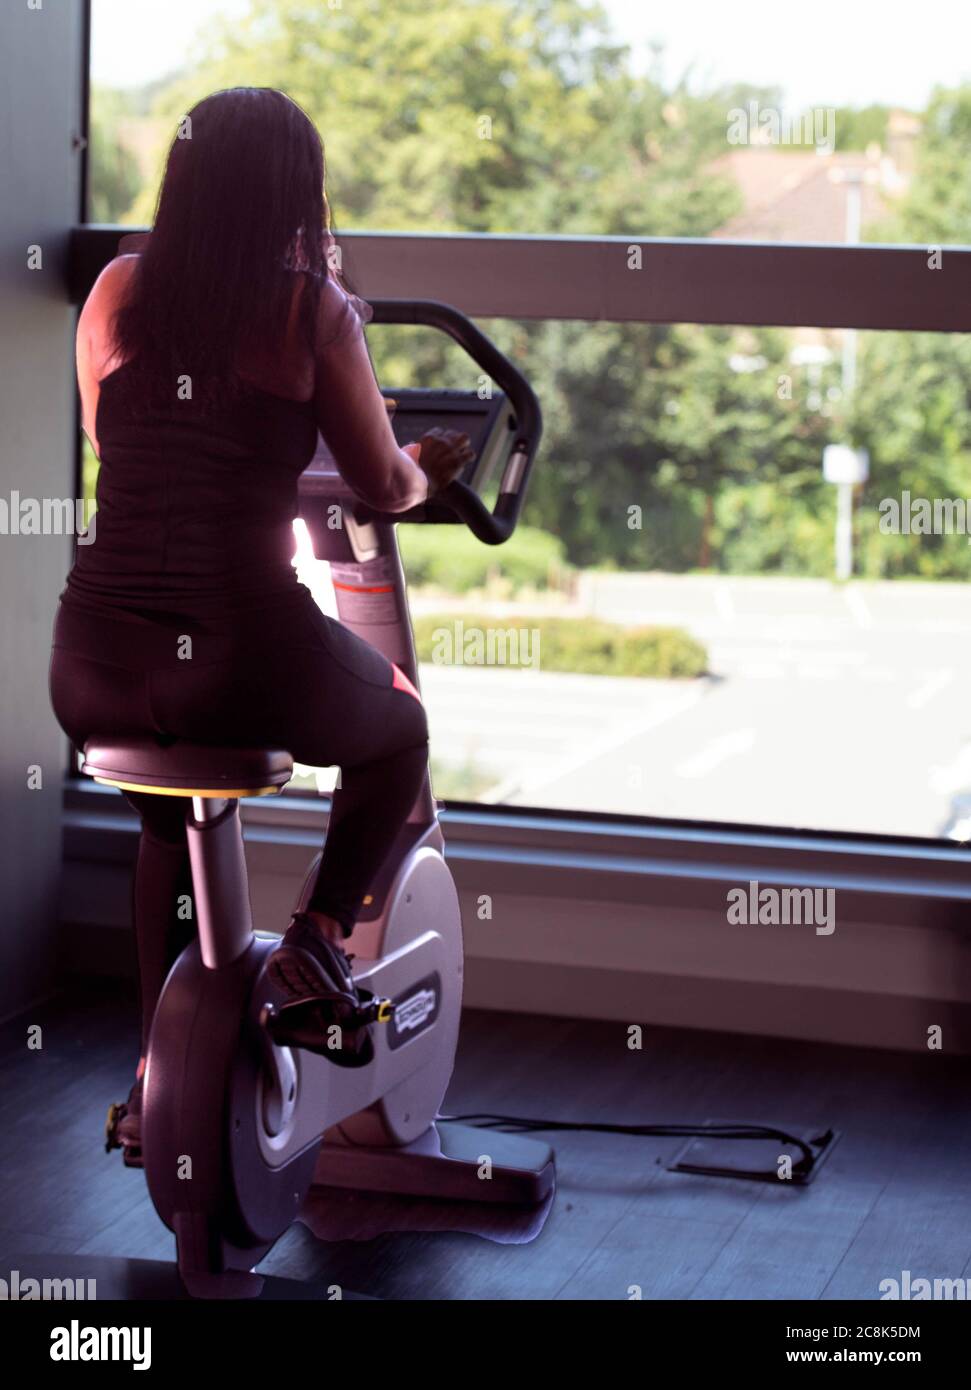 Black women exercising on exercise bike Stock Photo